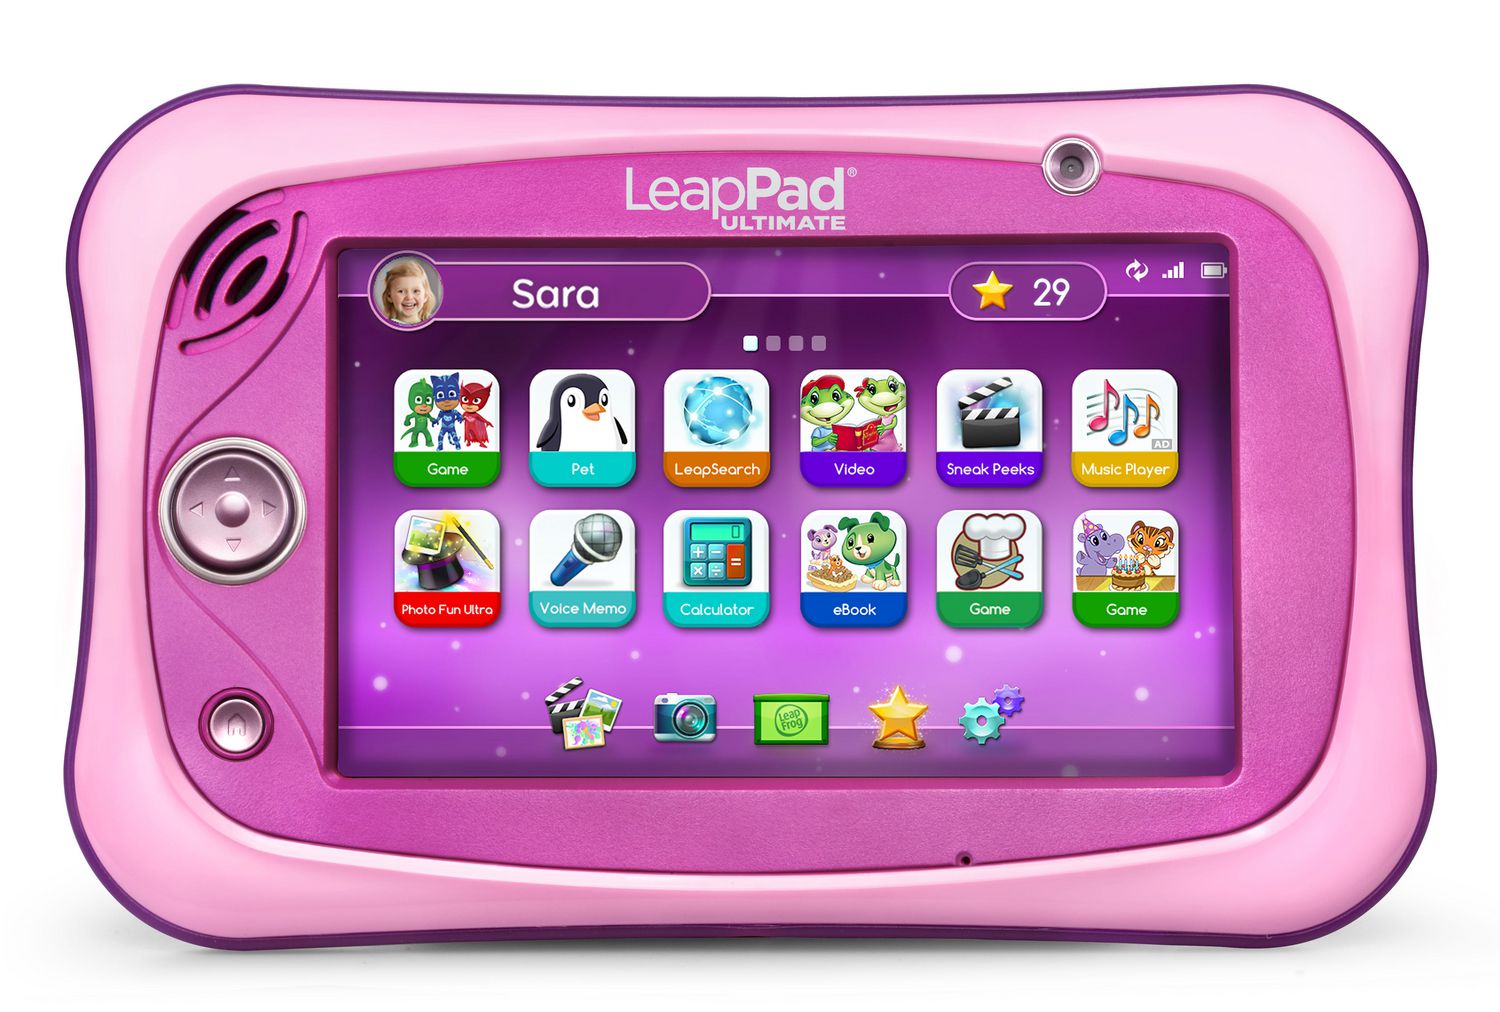 leapfrog tablet for 6 year old